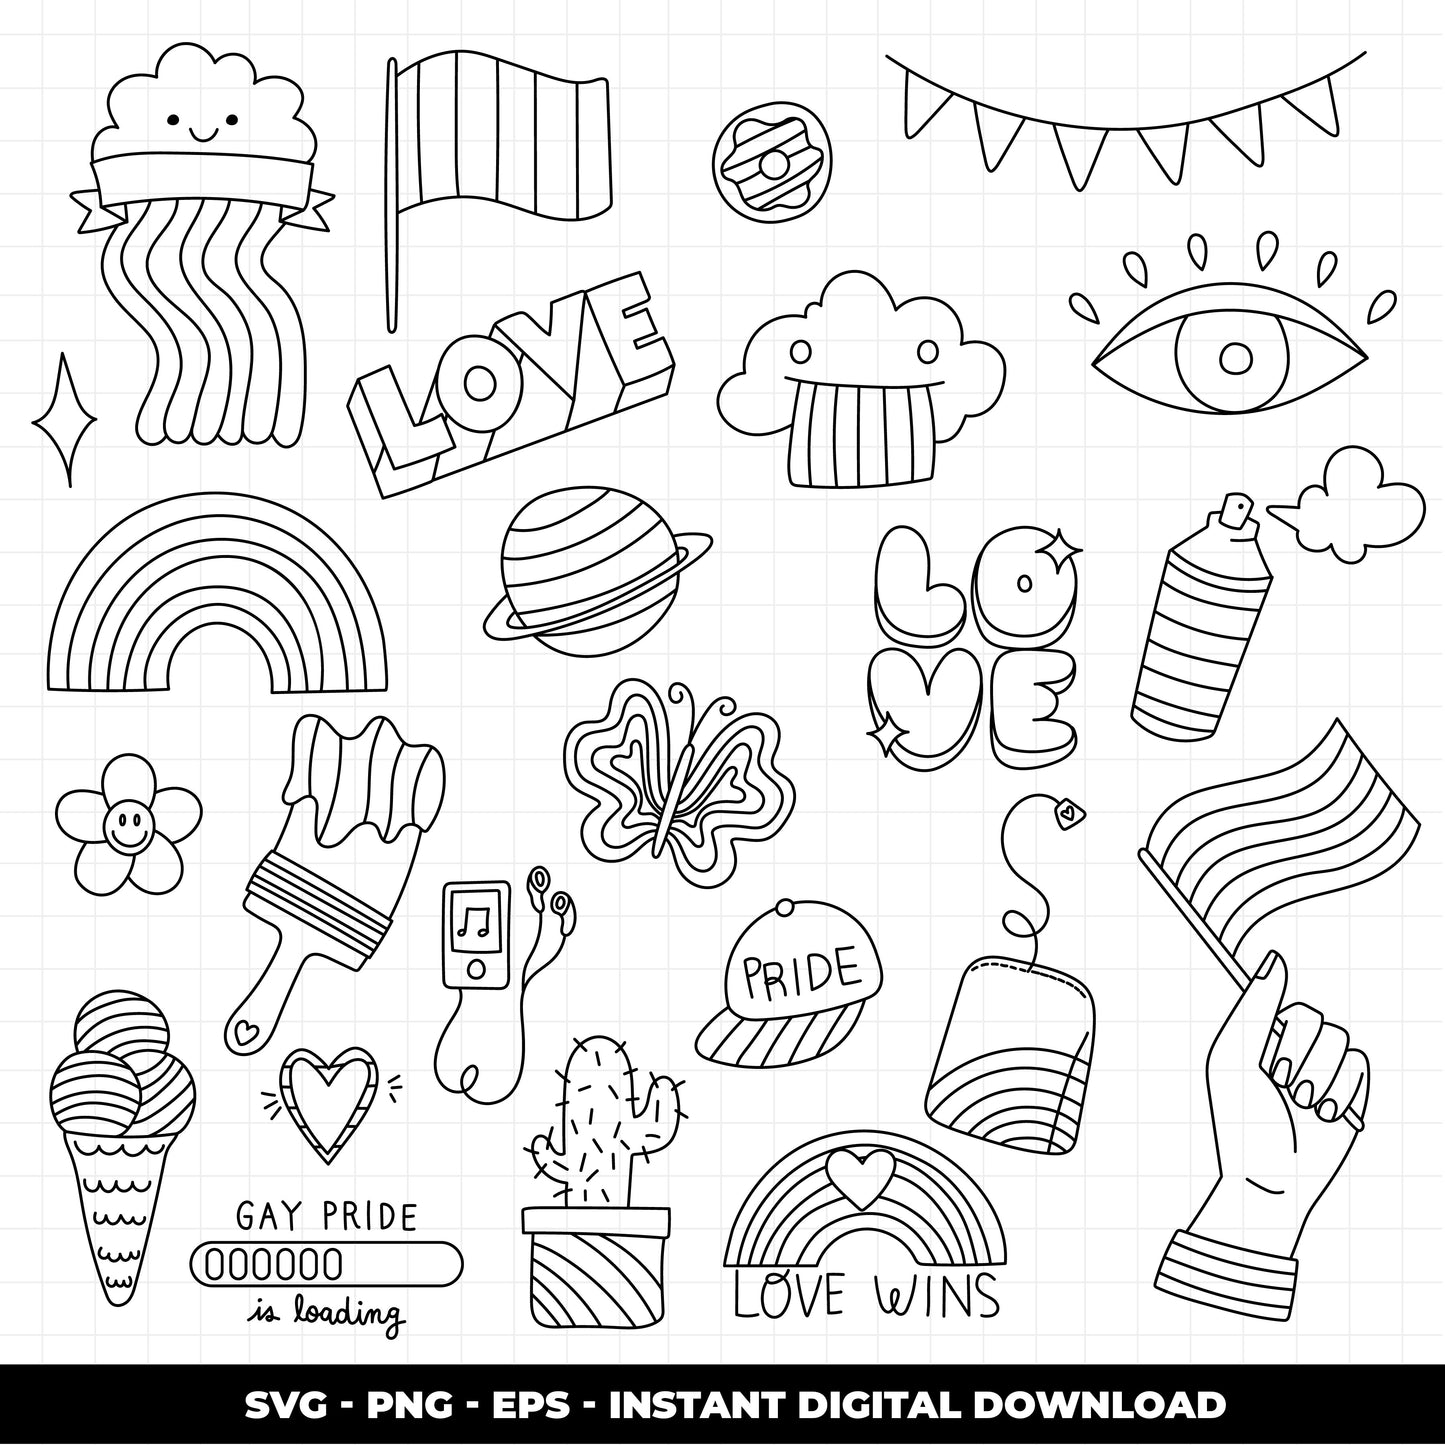 COD1389 - Doodle clipart, Pride Clipart, love is love Clipart, LGBT printable, pride svg, lgbt svg